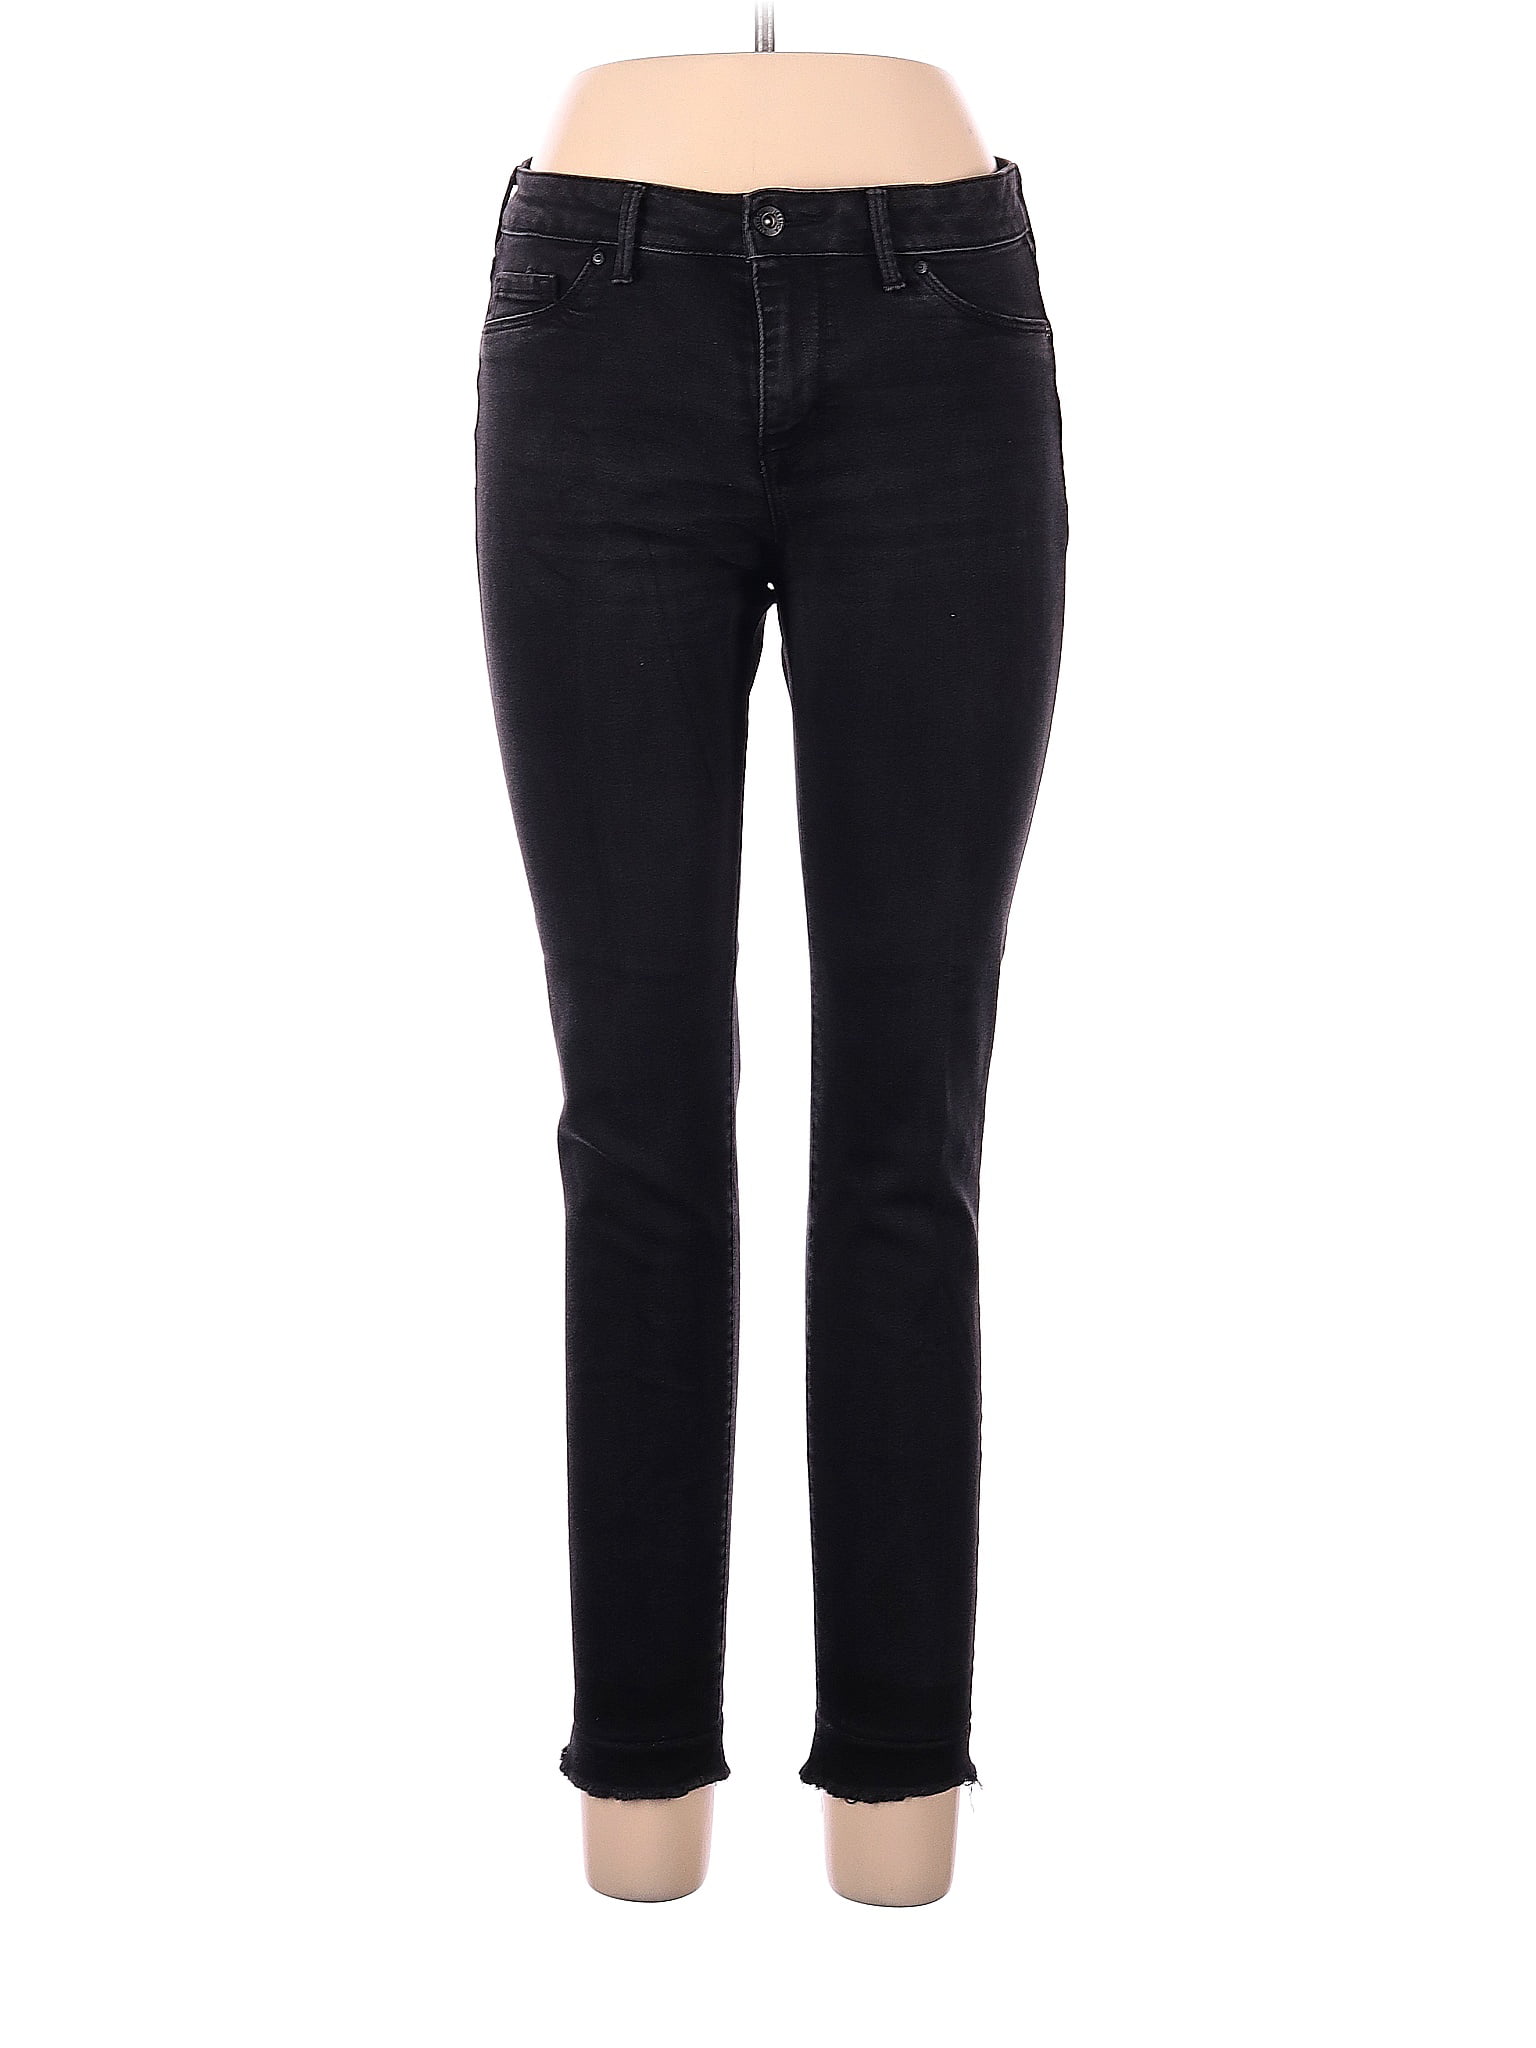 2LUV Women's Stretchy 5 Pocket Dark Acid Wash Skinny Jeans 